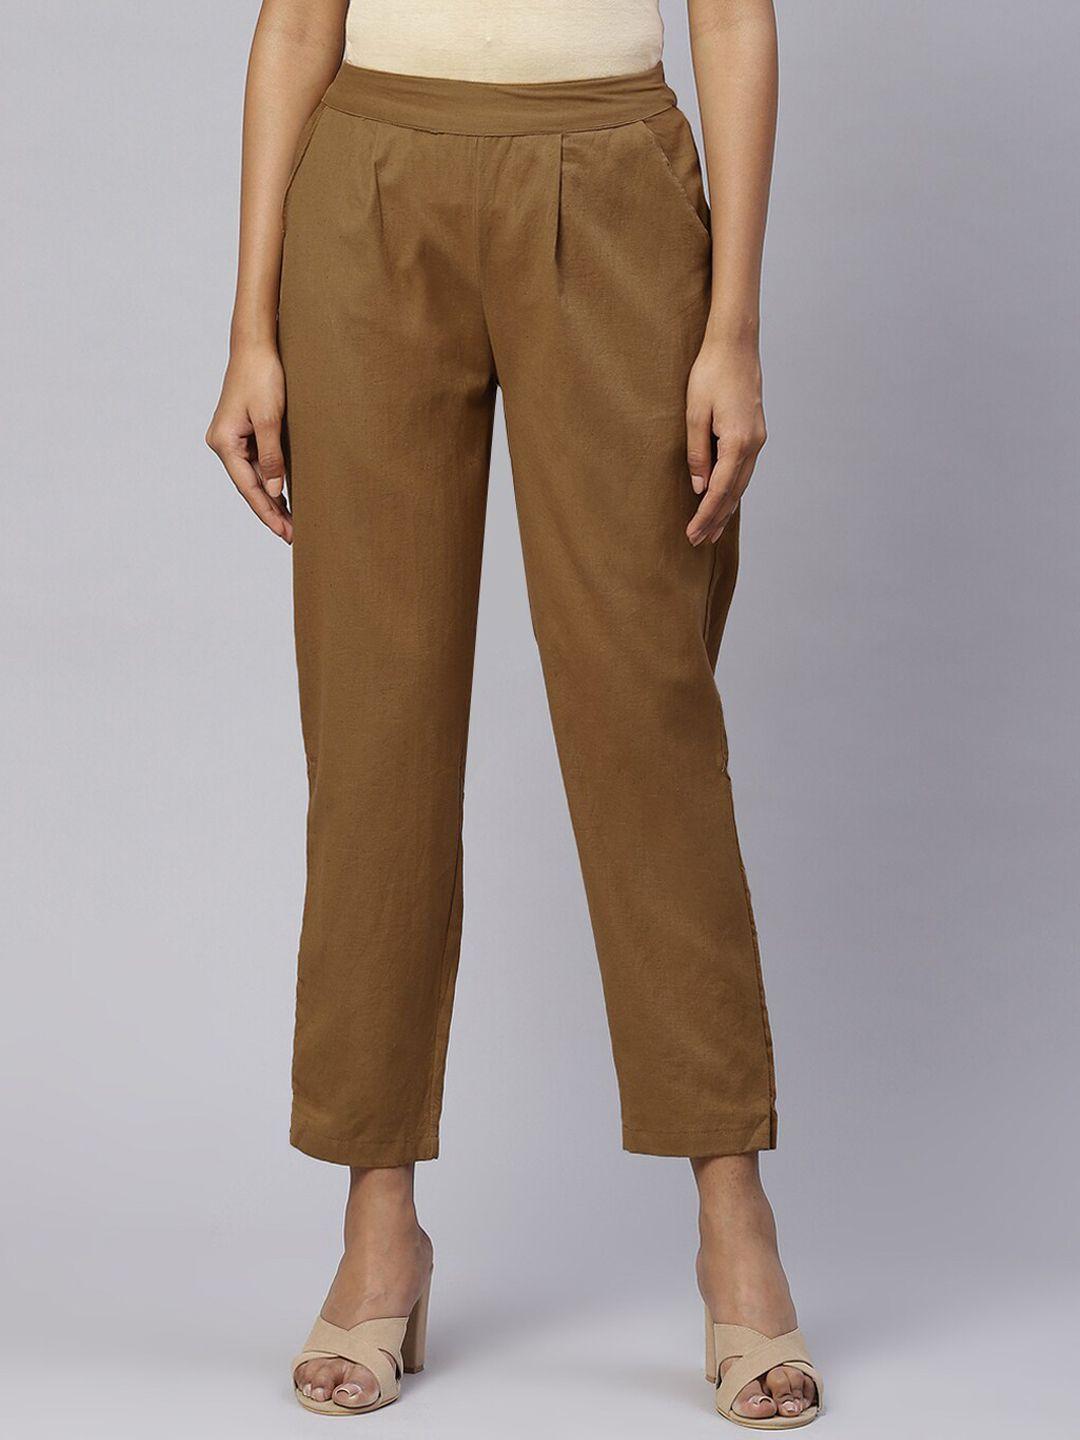 saart bunaai women brown solid pleated cotton trousers